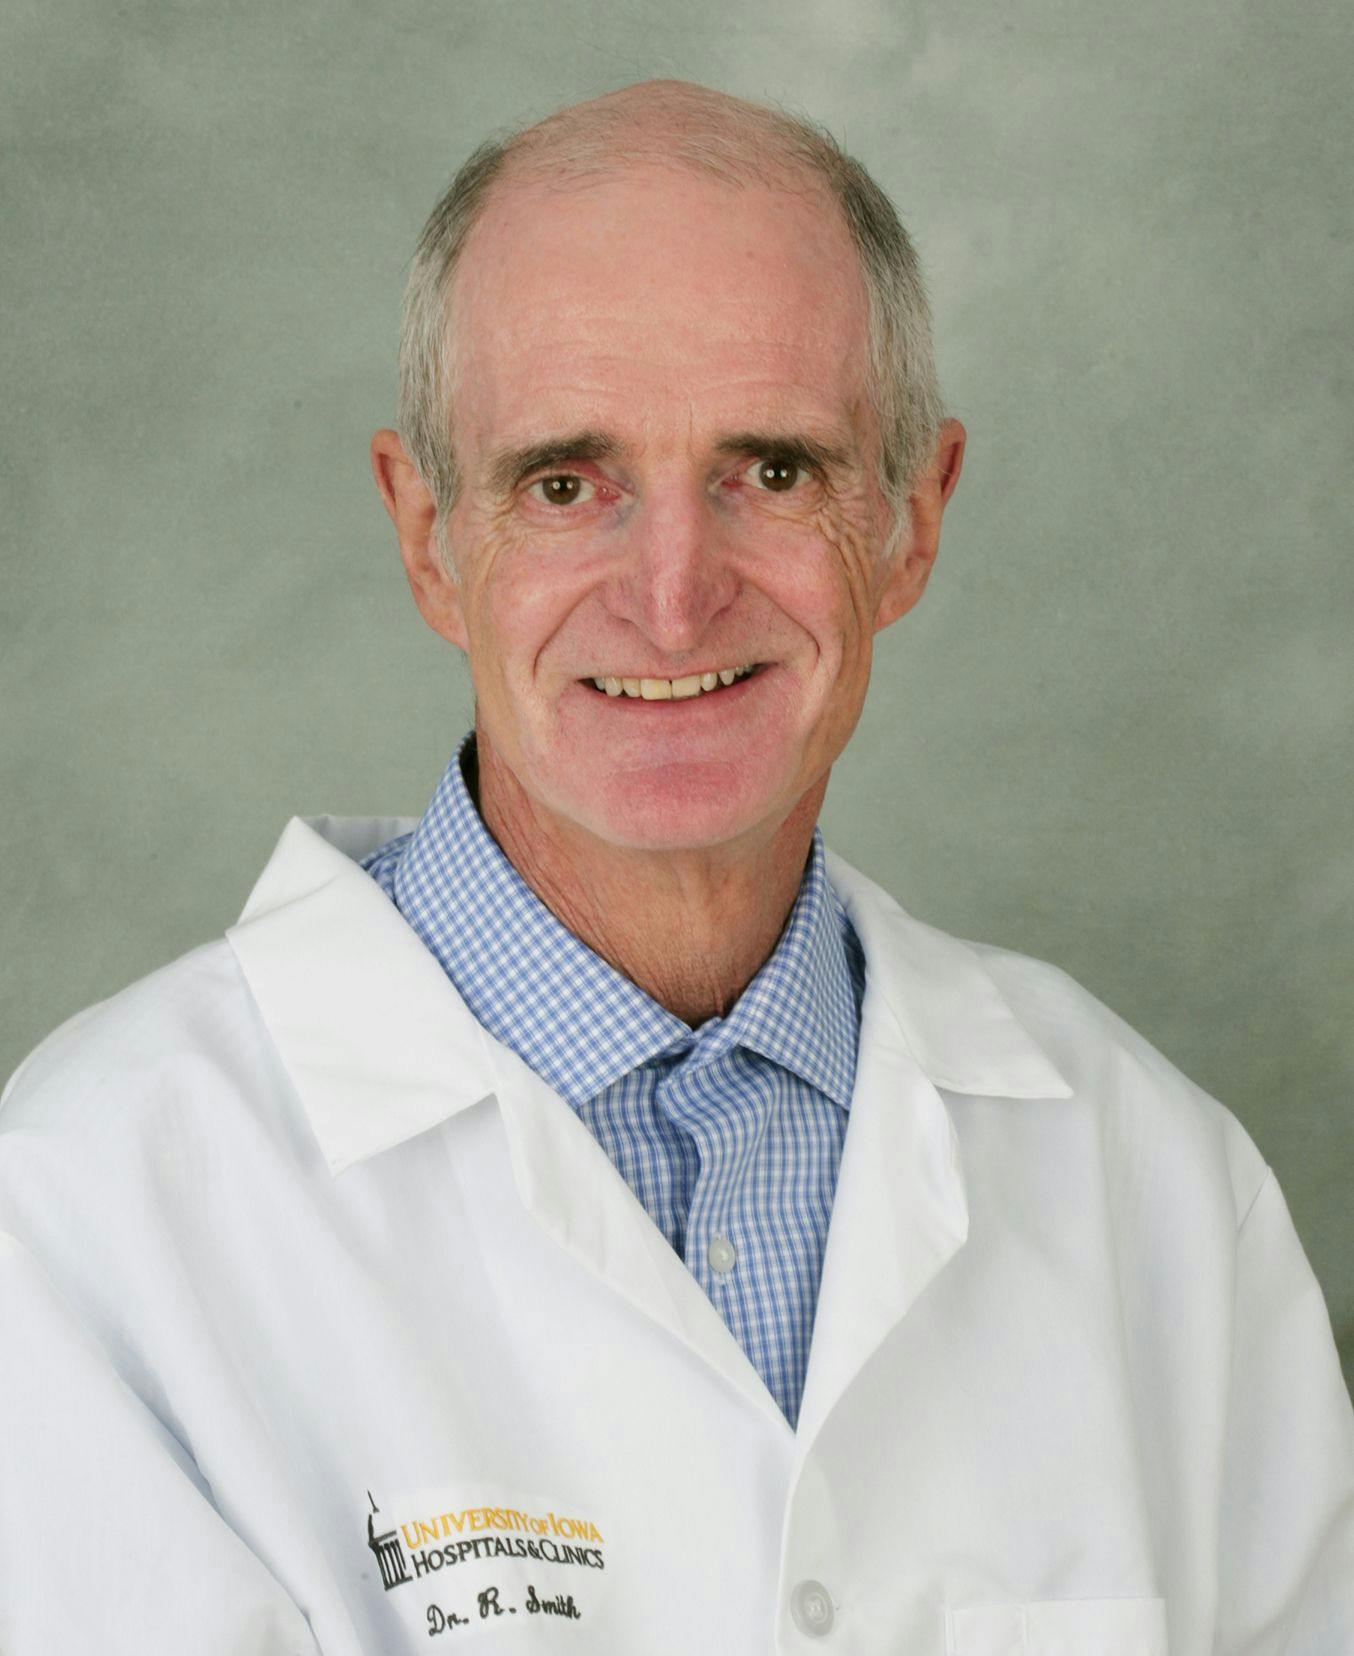 Richard J. H. Smith, MD